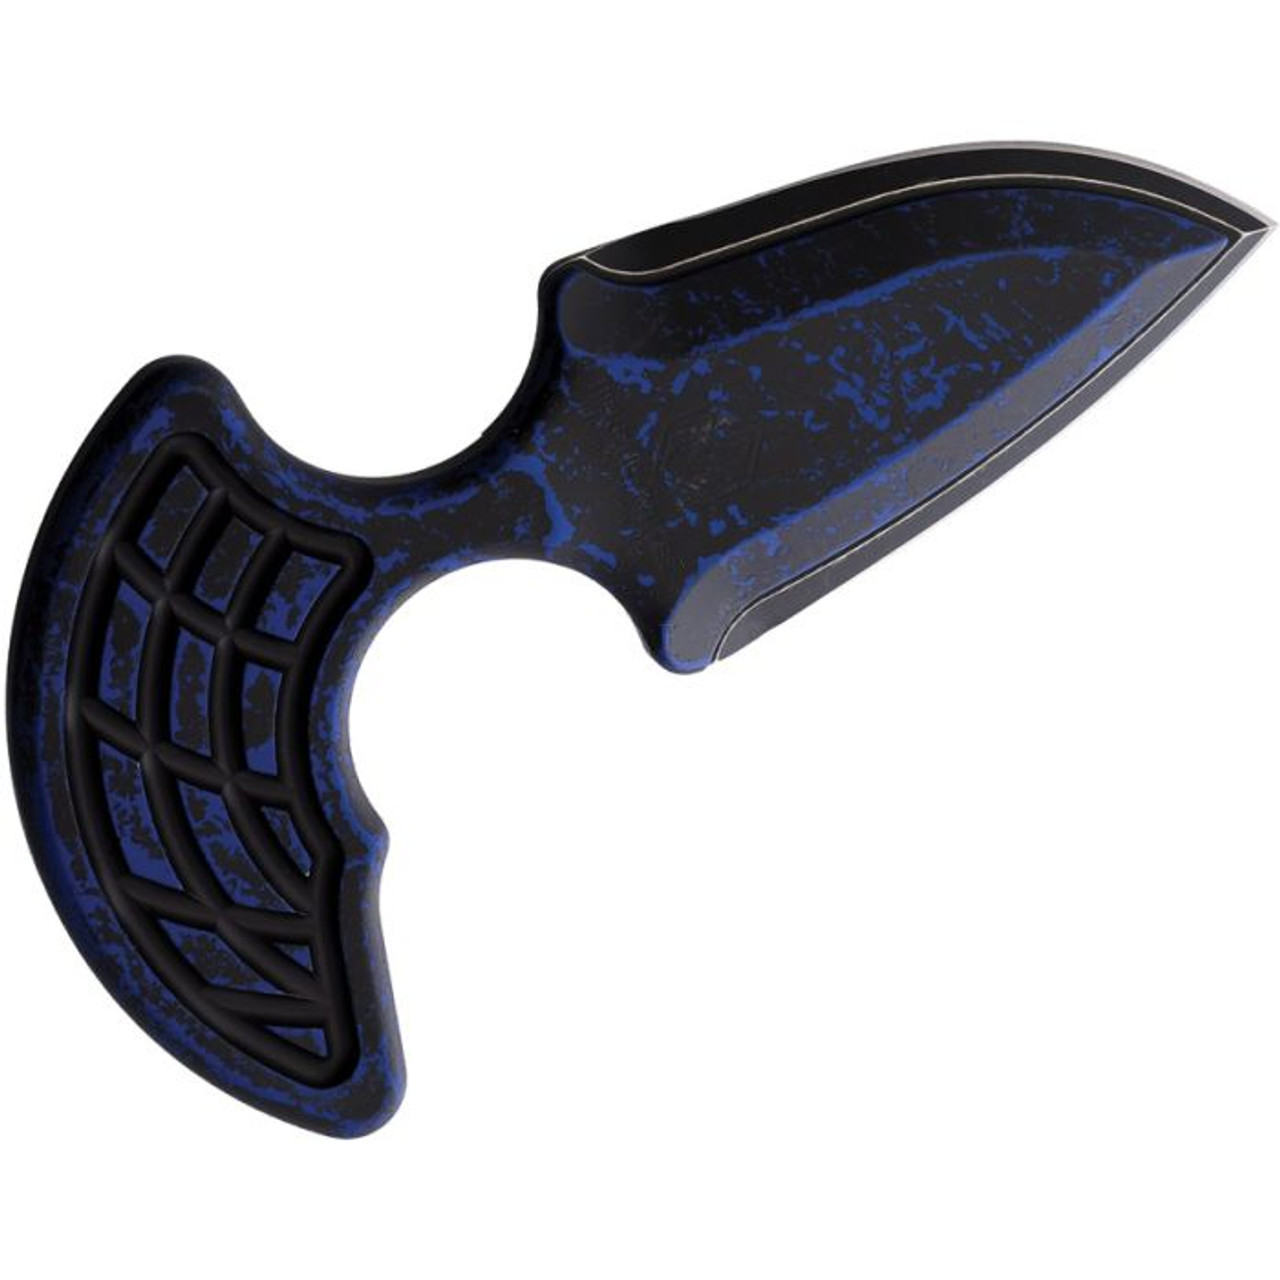 Heretic Sleight Push Dagger Fixed Blade (H0508ABRKBLU) - 2.8" CPM-20CV Battleworn Black Double Edge Dagger, Breakthrough Blue Anodized Aluminum Handle, Black Kydex Sheath with Tek-Lok